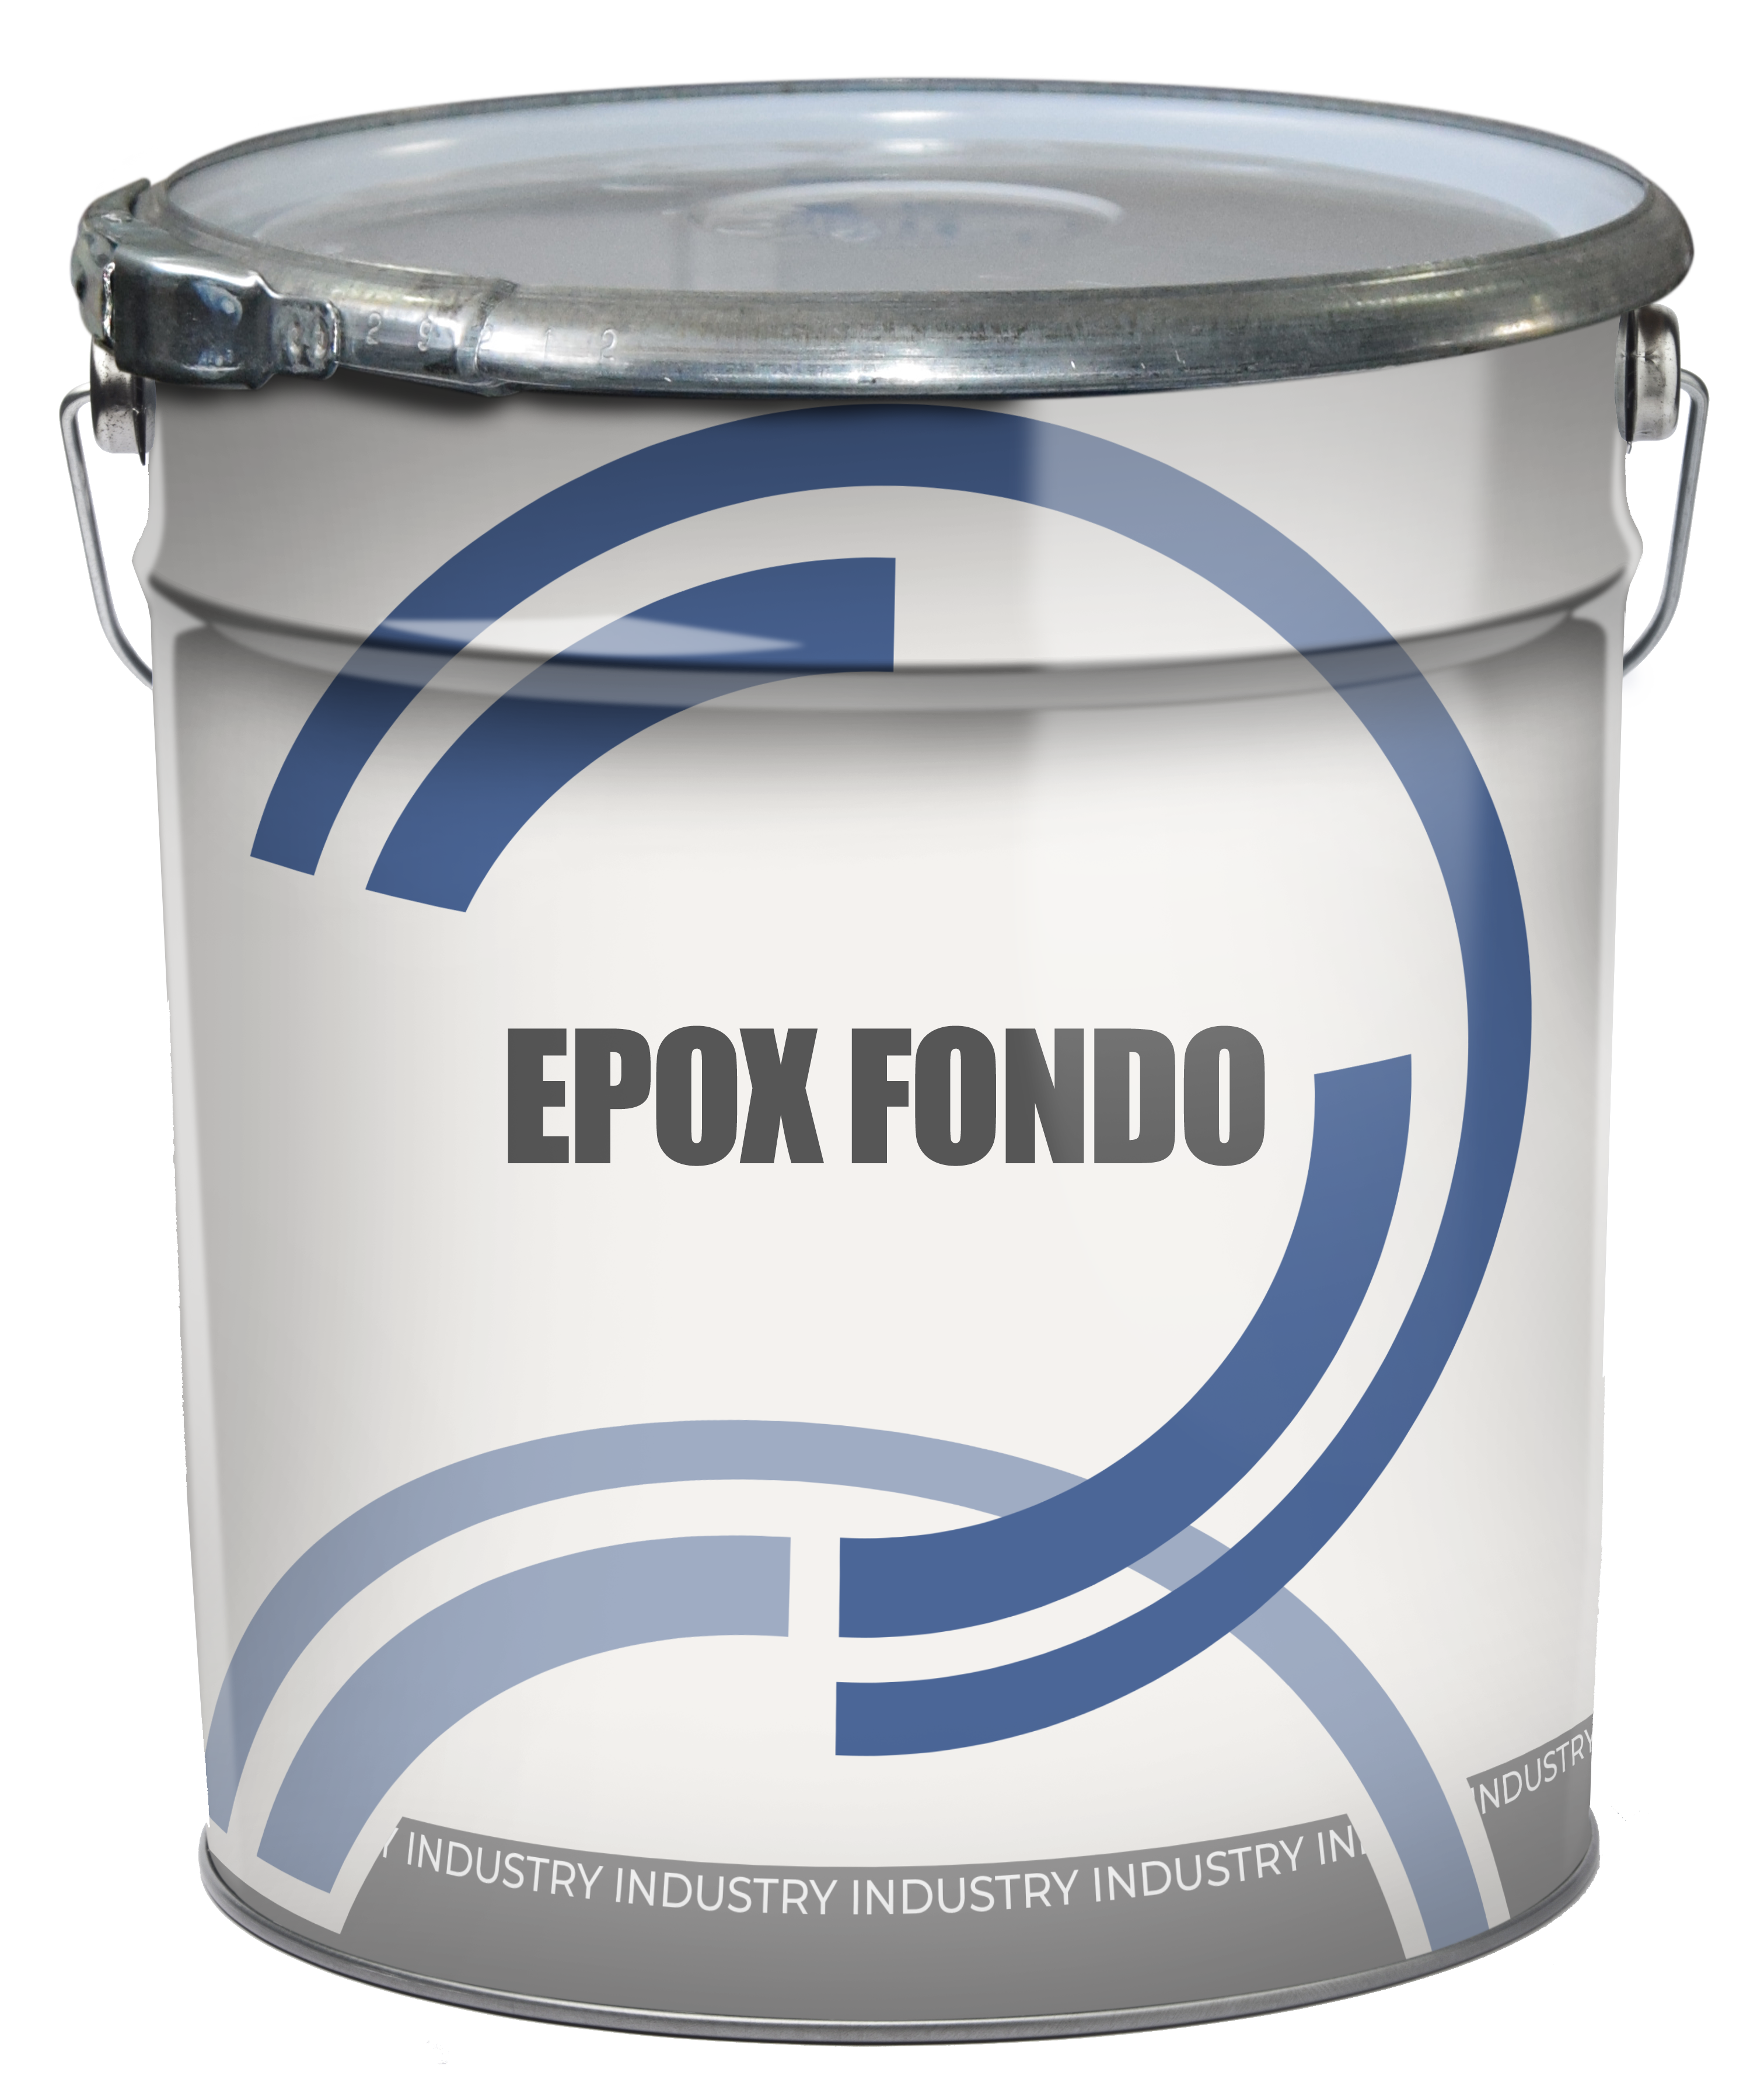 Epox Fondo